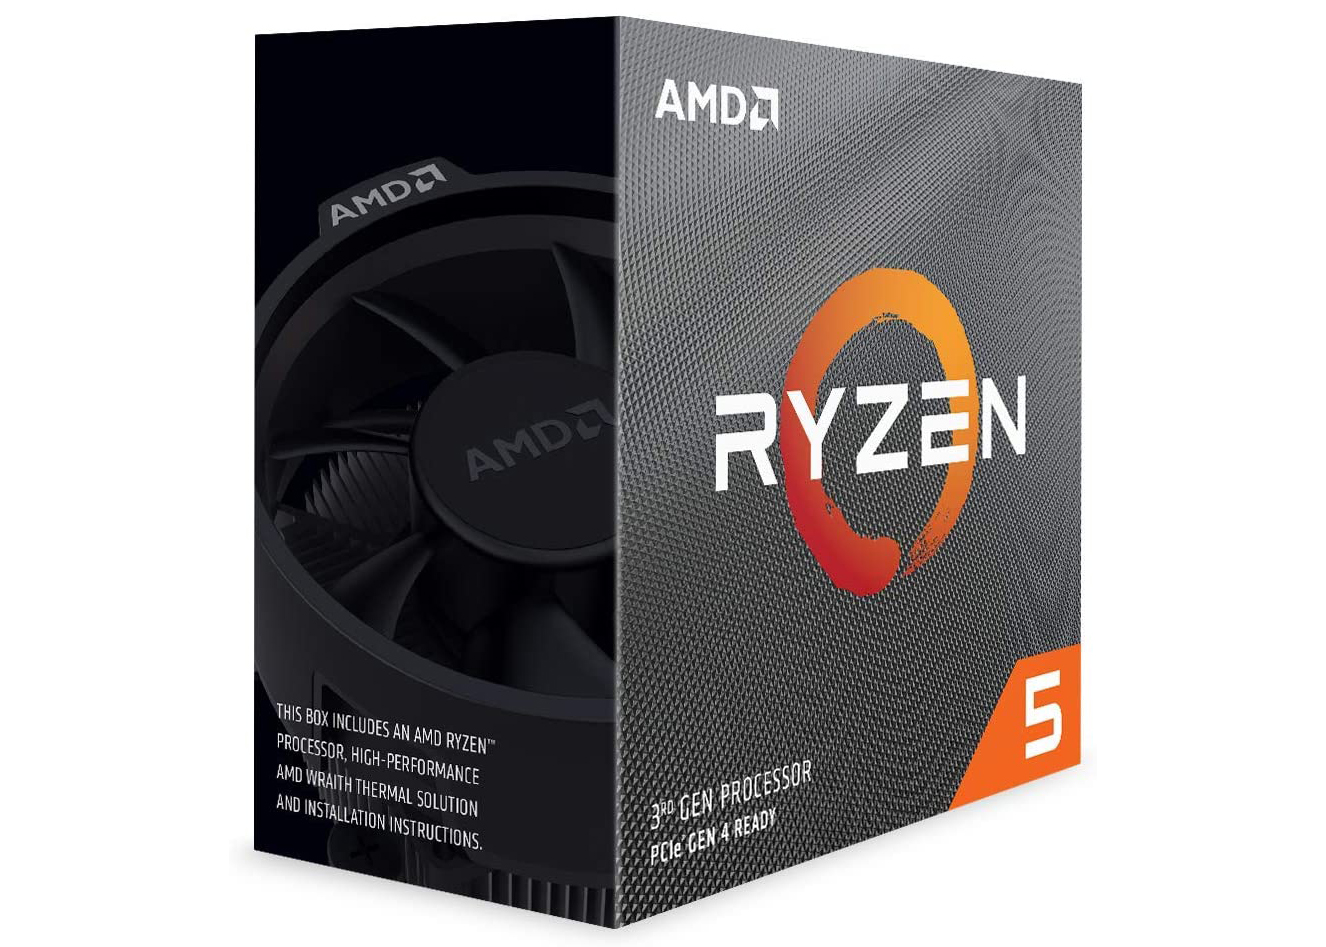 AMD Ryzen 5 3600 6-Core, 12-Thread Unlocked Desktop Processor with 